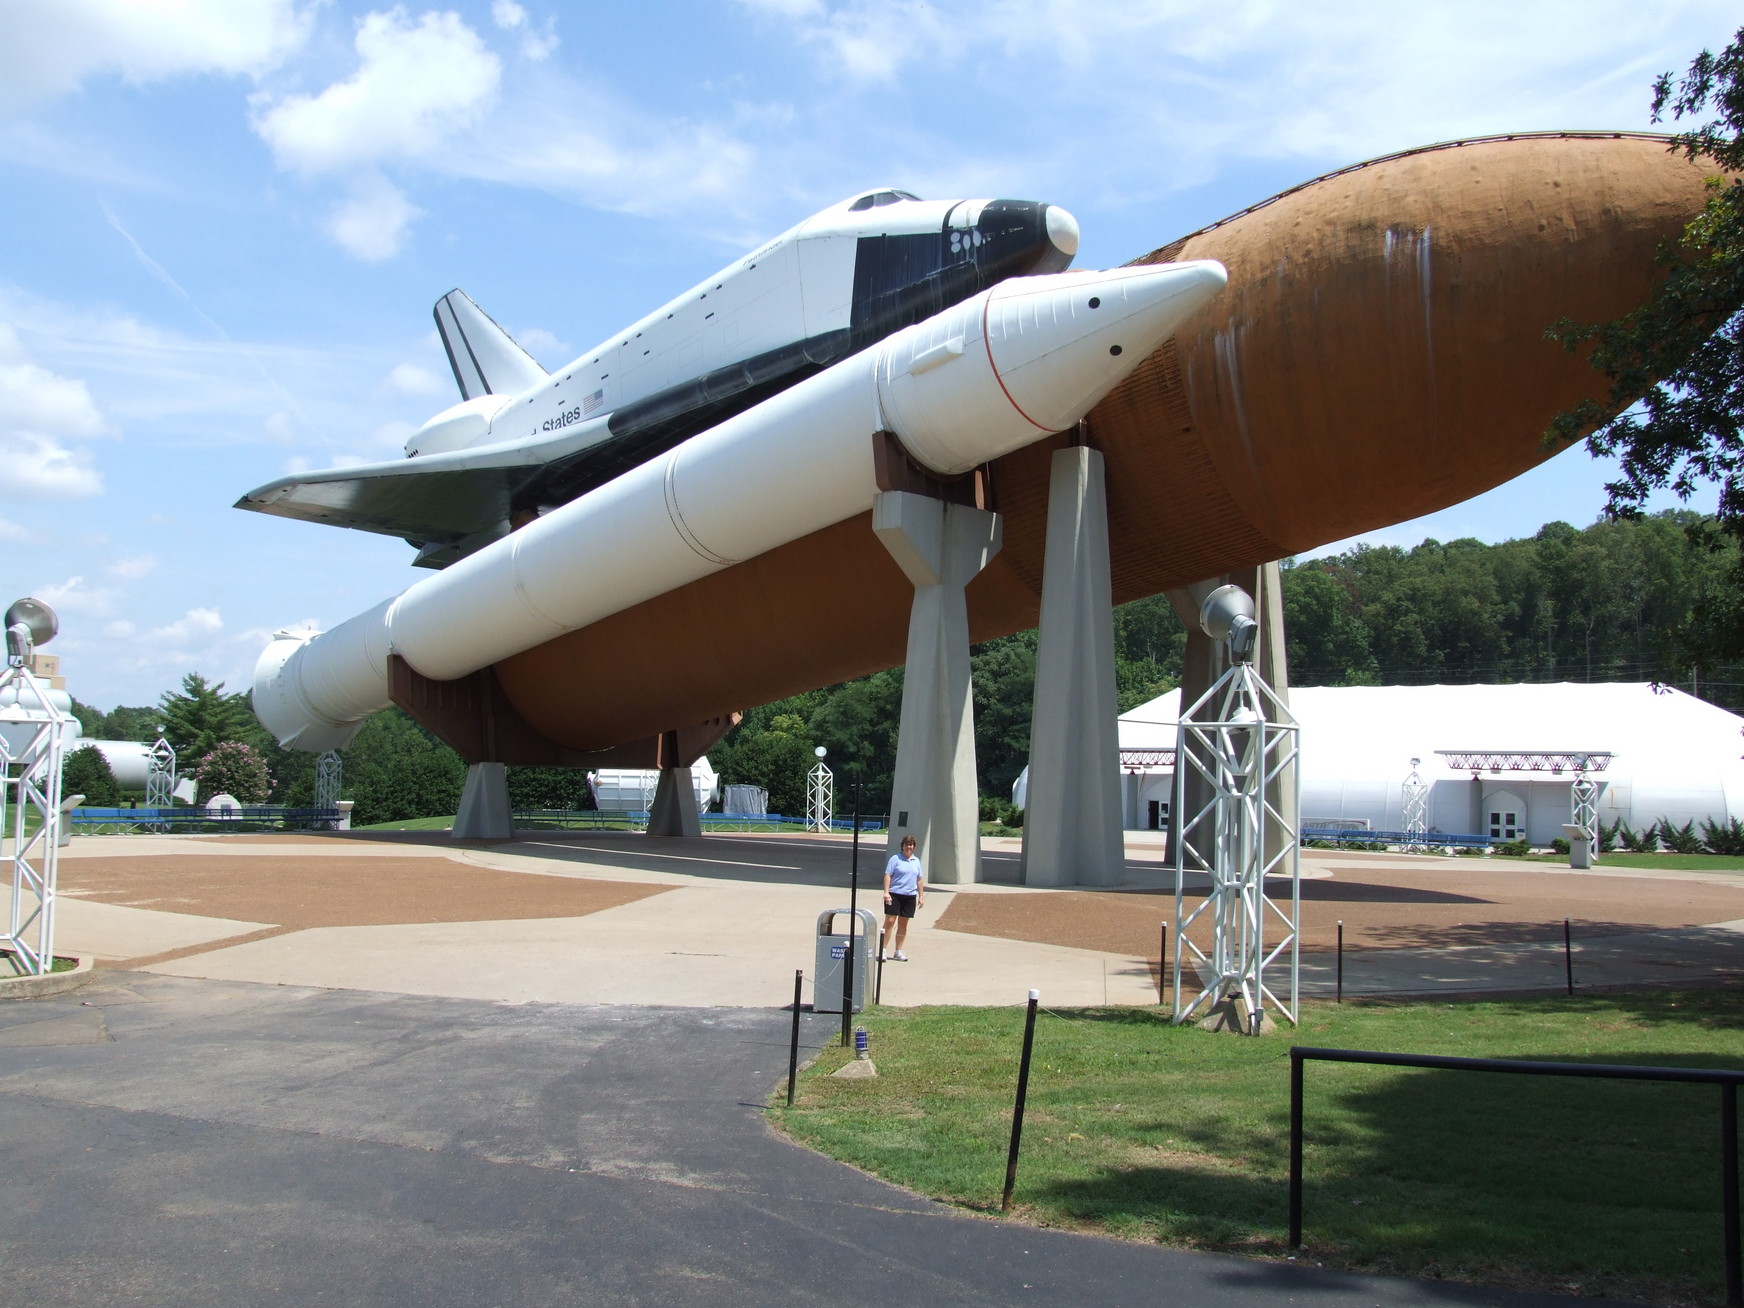 Us Space And Rocket Center Huntsville Alabama July 18 2007